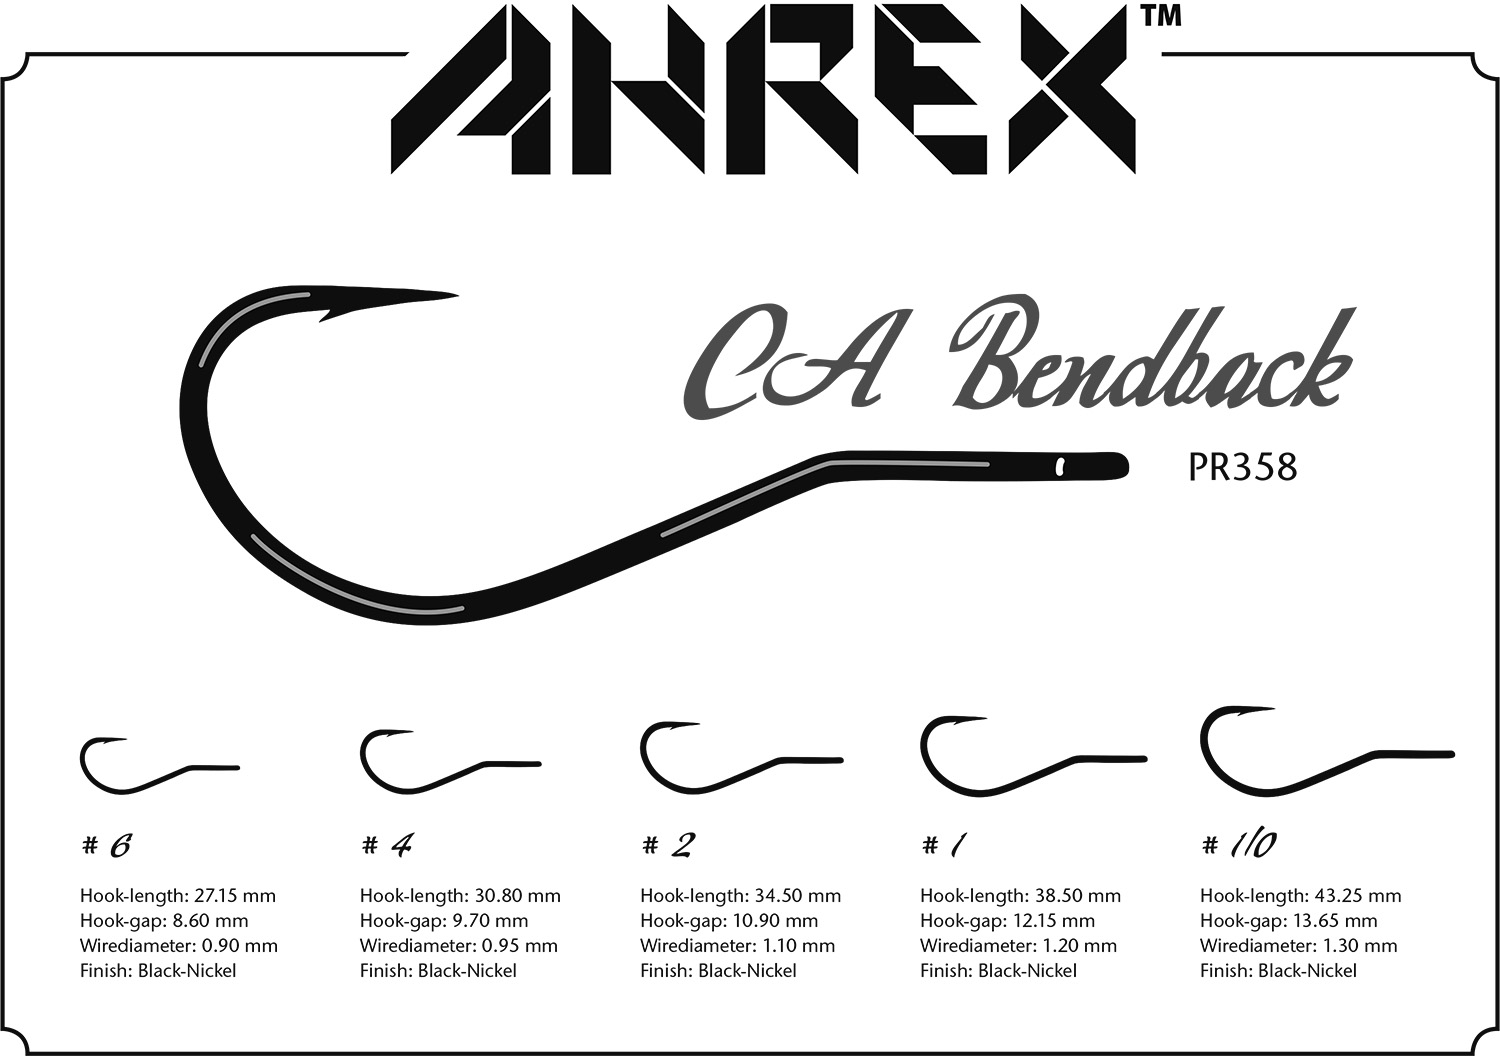 PR358 – CA BENDBACK - Ahrex Hooks